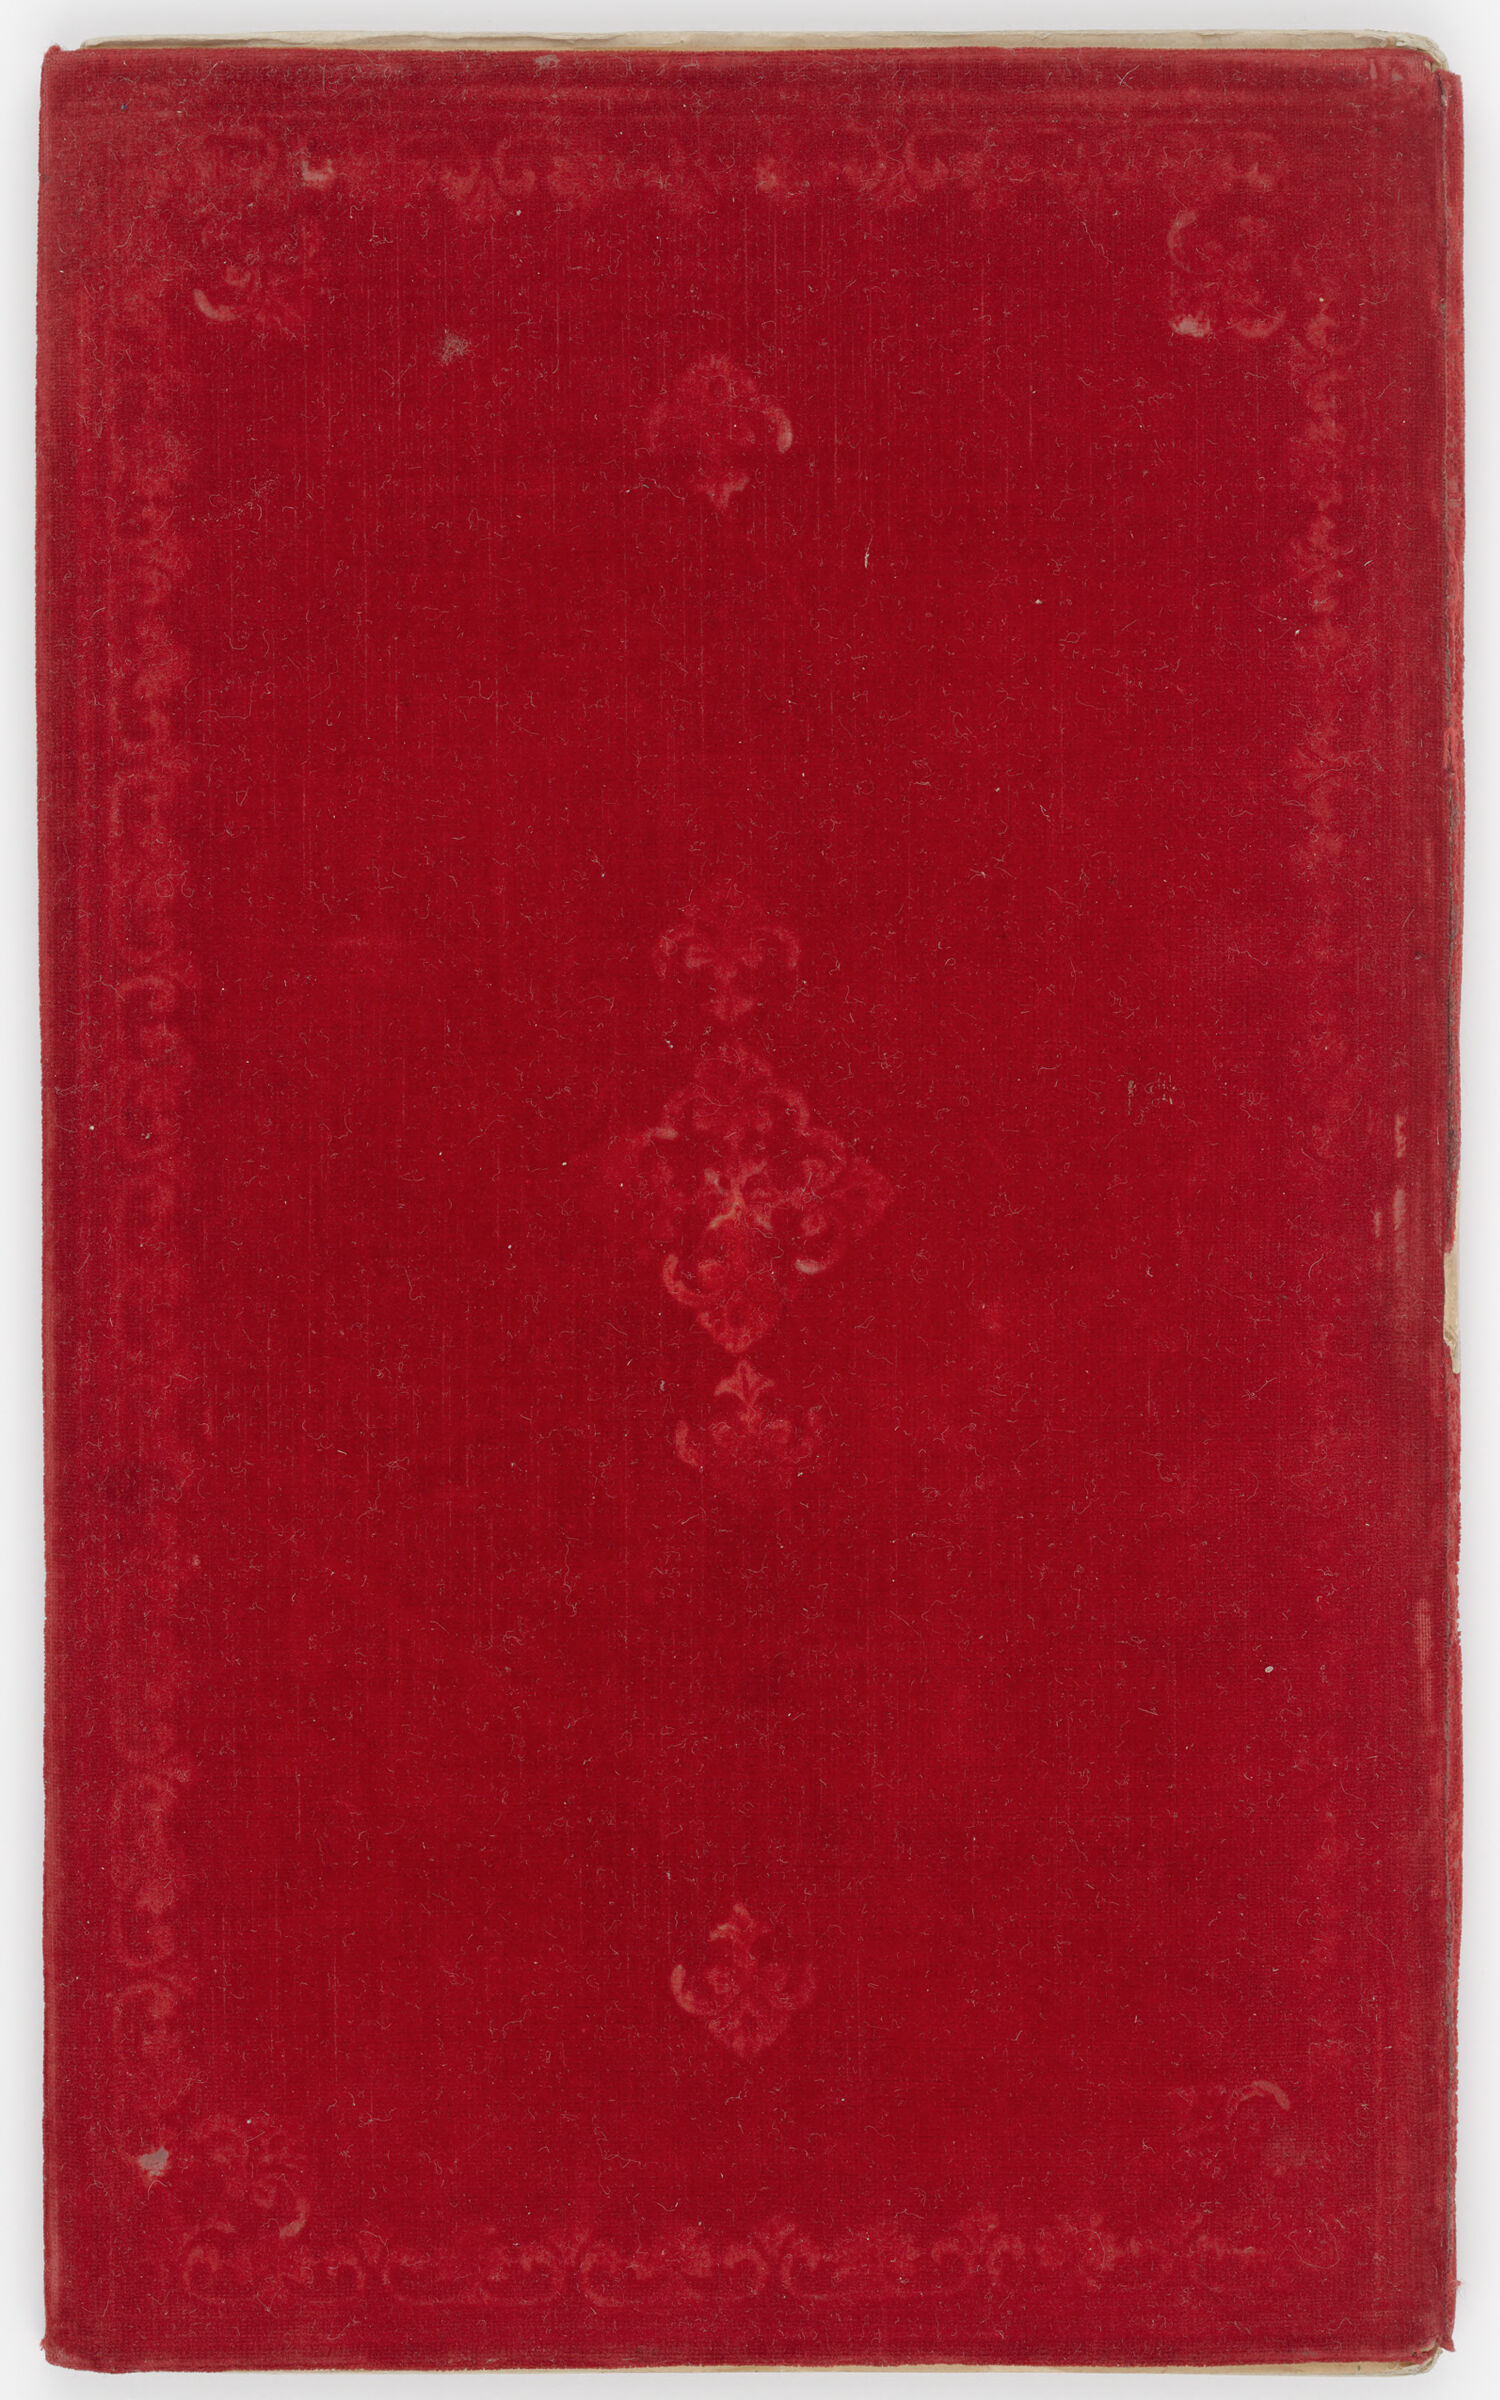 Manuscript Of The Munsha’at (Letters) By Sharaf Munshi